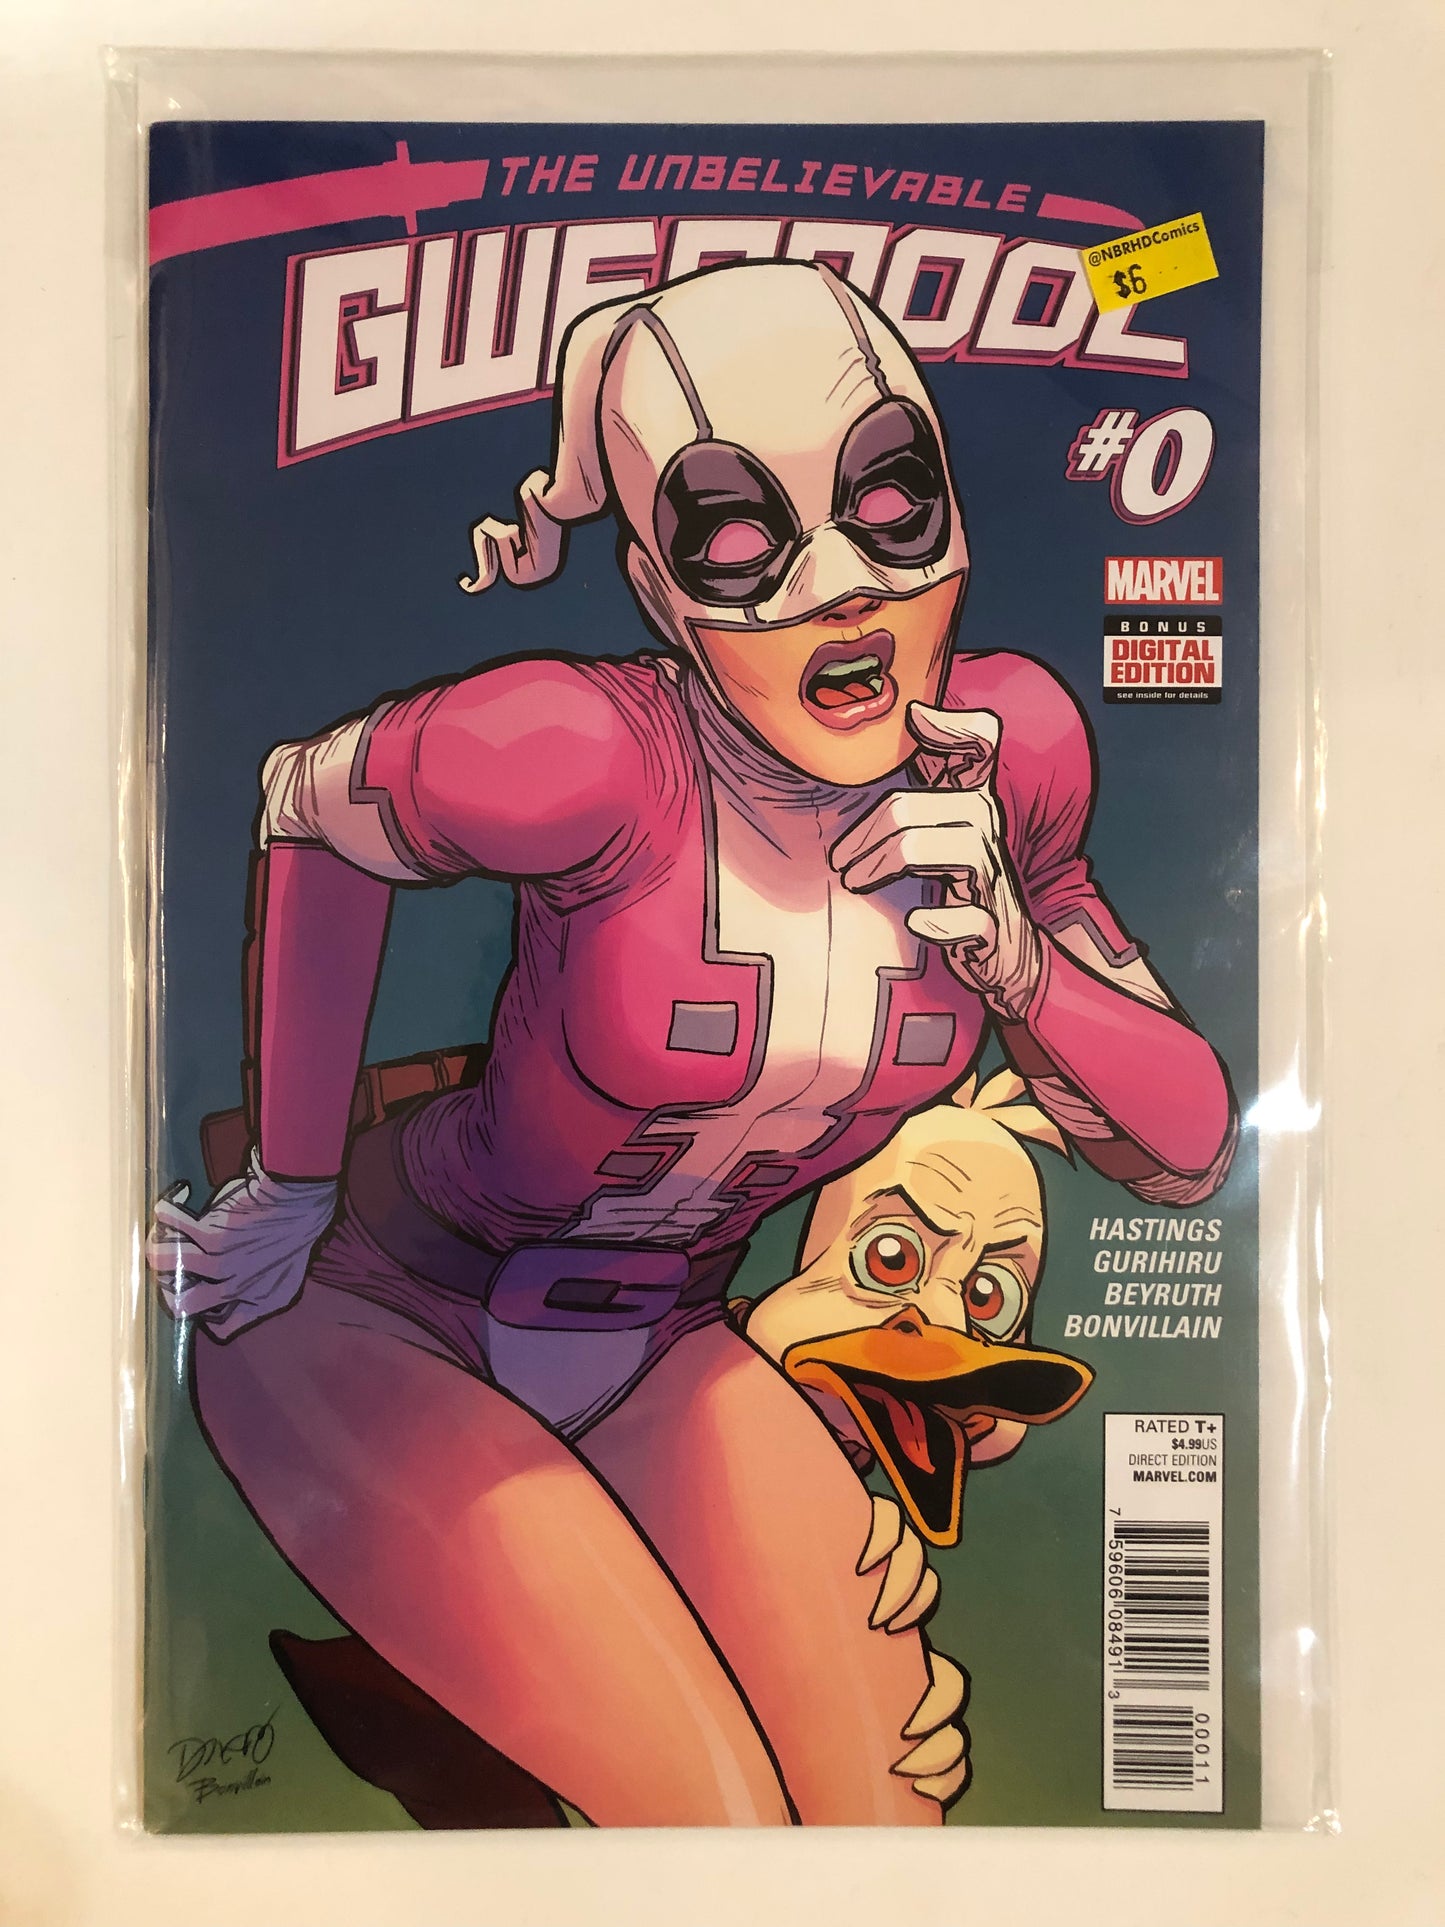 The Unbelievable Gwenpool #0